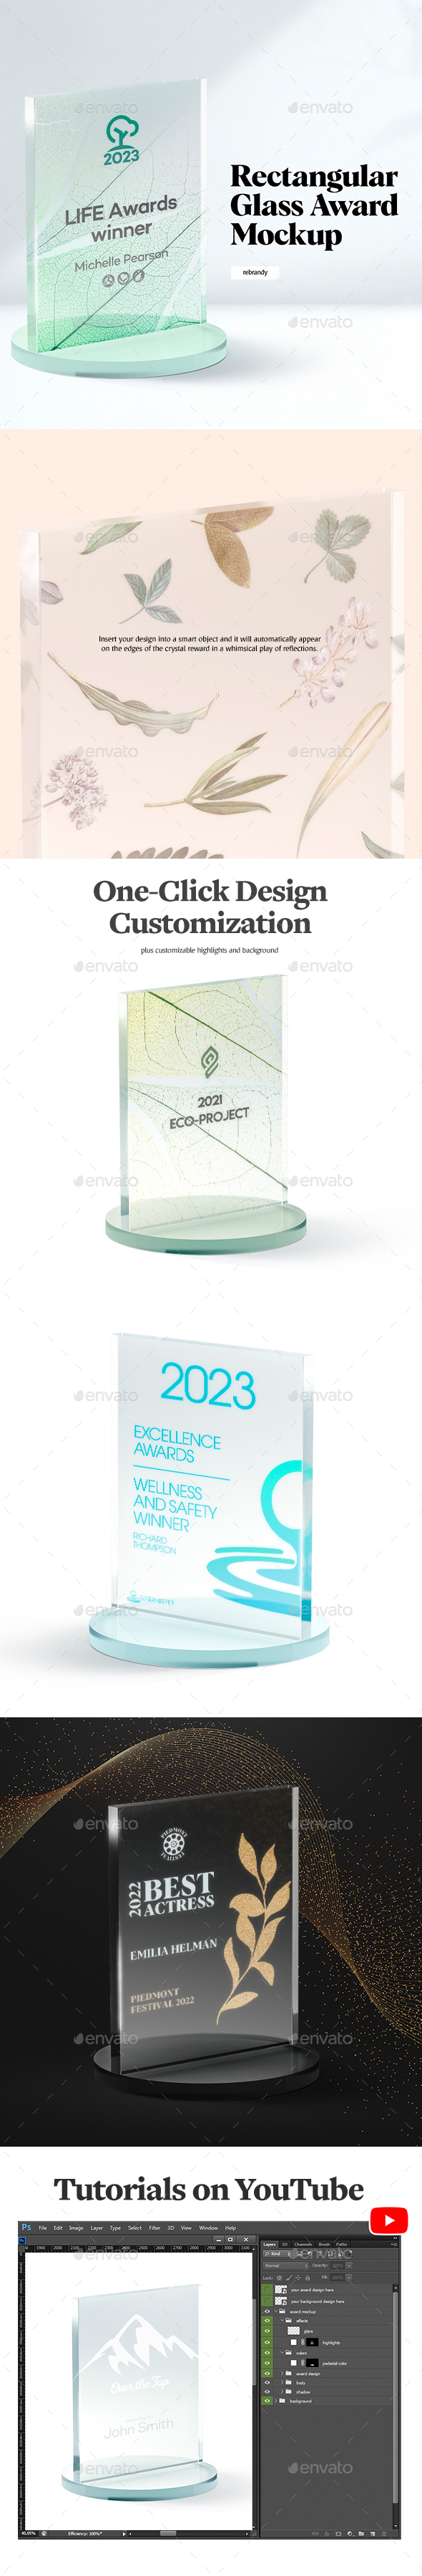 Rectangular Glass Award Mockup